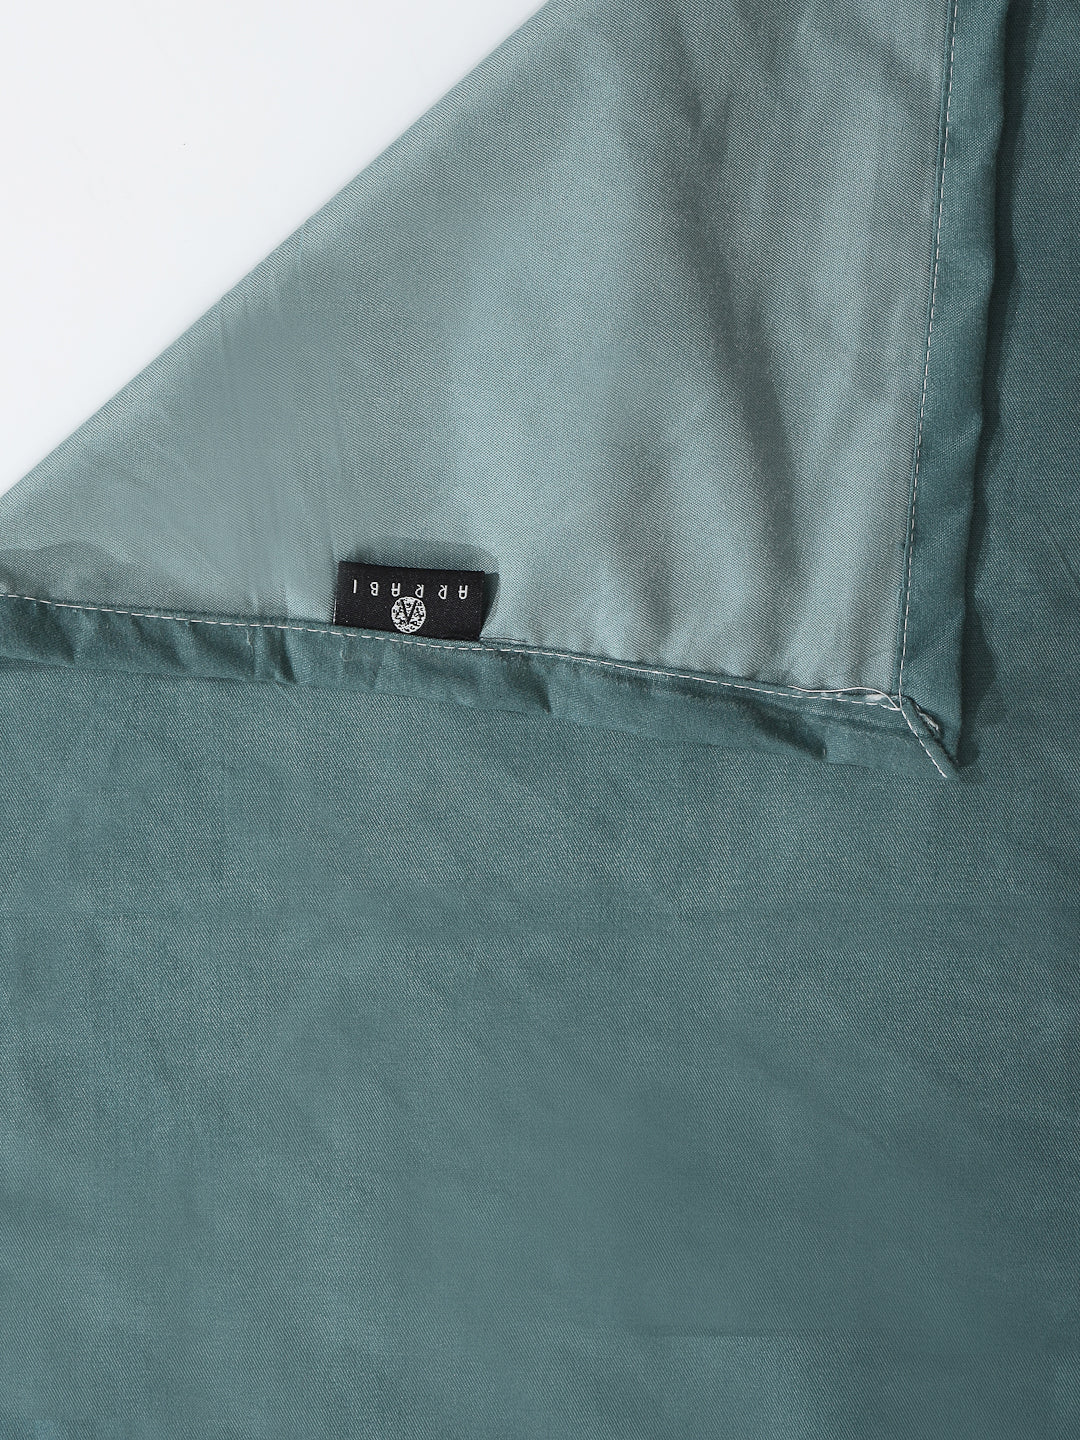 Arrabi Multi Stripes TC Cotton Blend Super King Size Bedsheet with 2 Pillow Covers (270 x 260 cm)